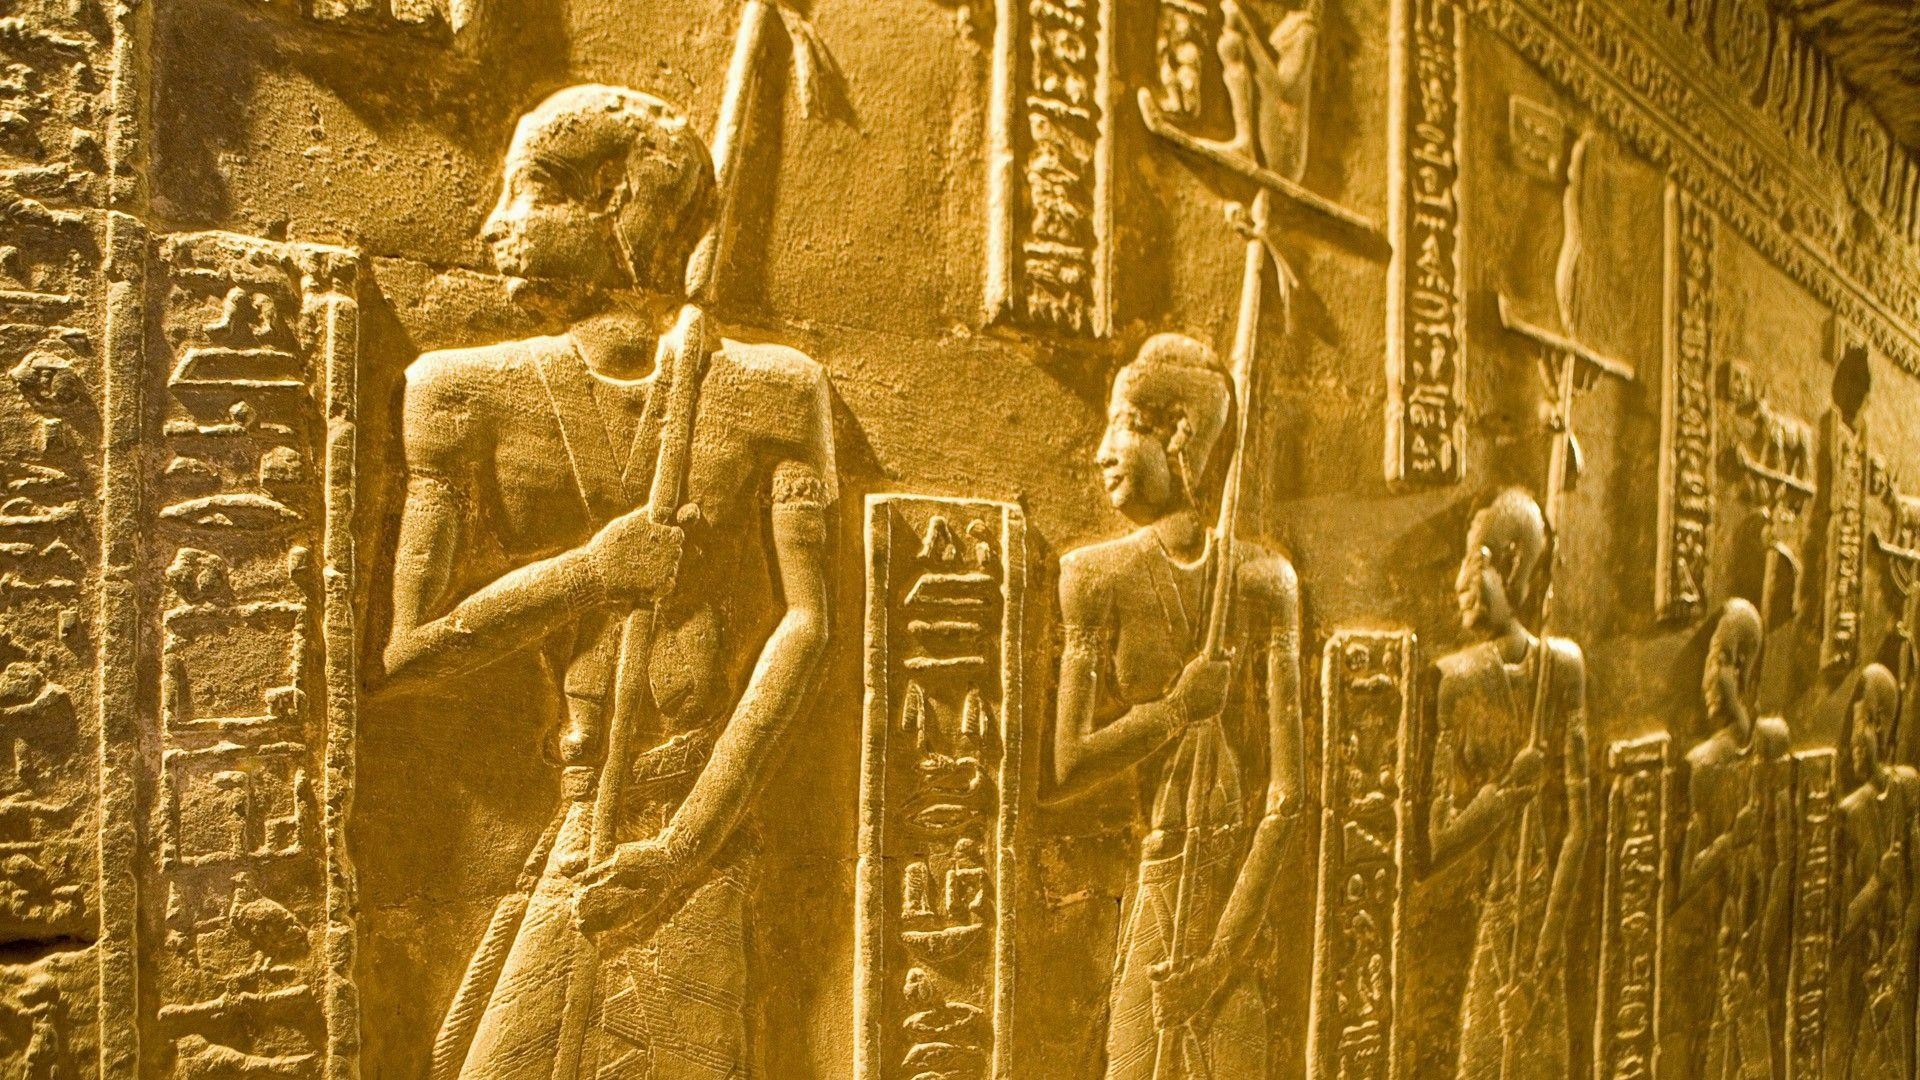 1920x1080 wallpaper.wiki-Egyptian-Hieroglyphics-Image-HD-PIC-WPD007169